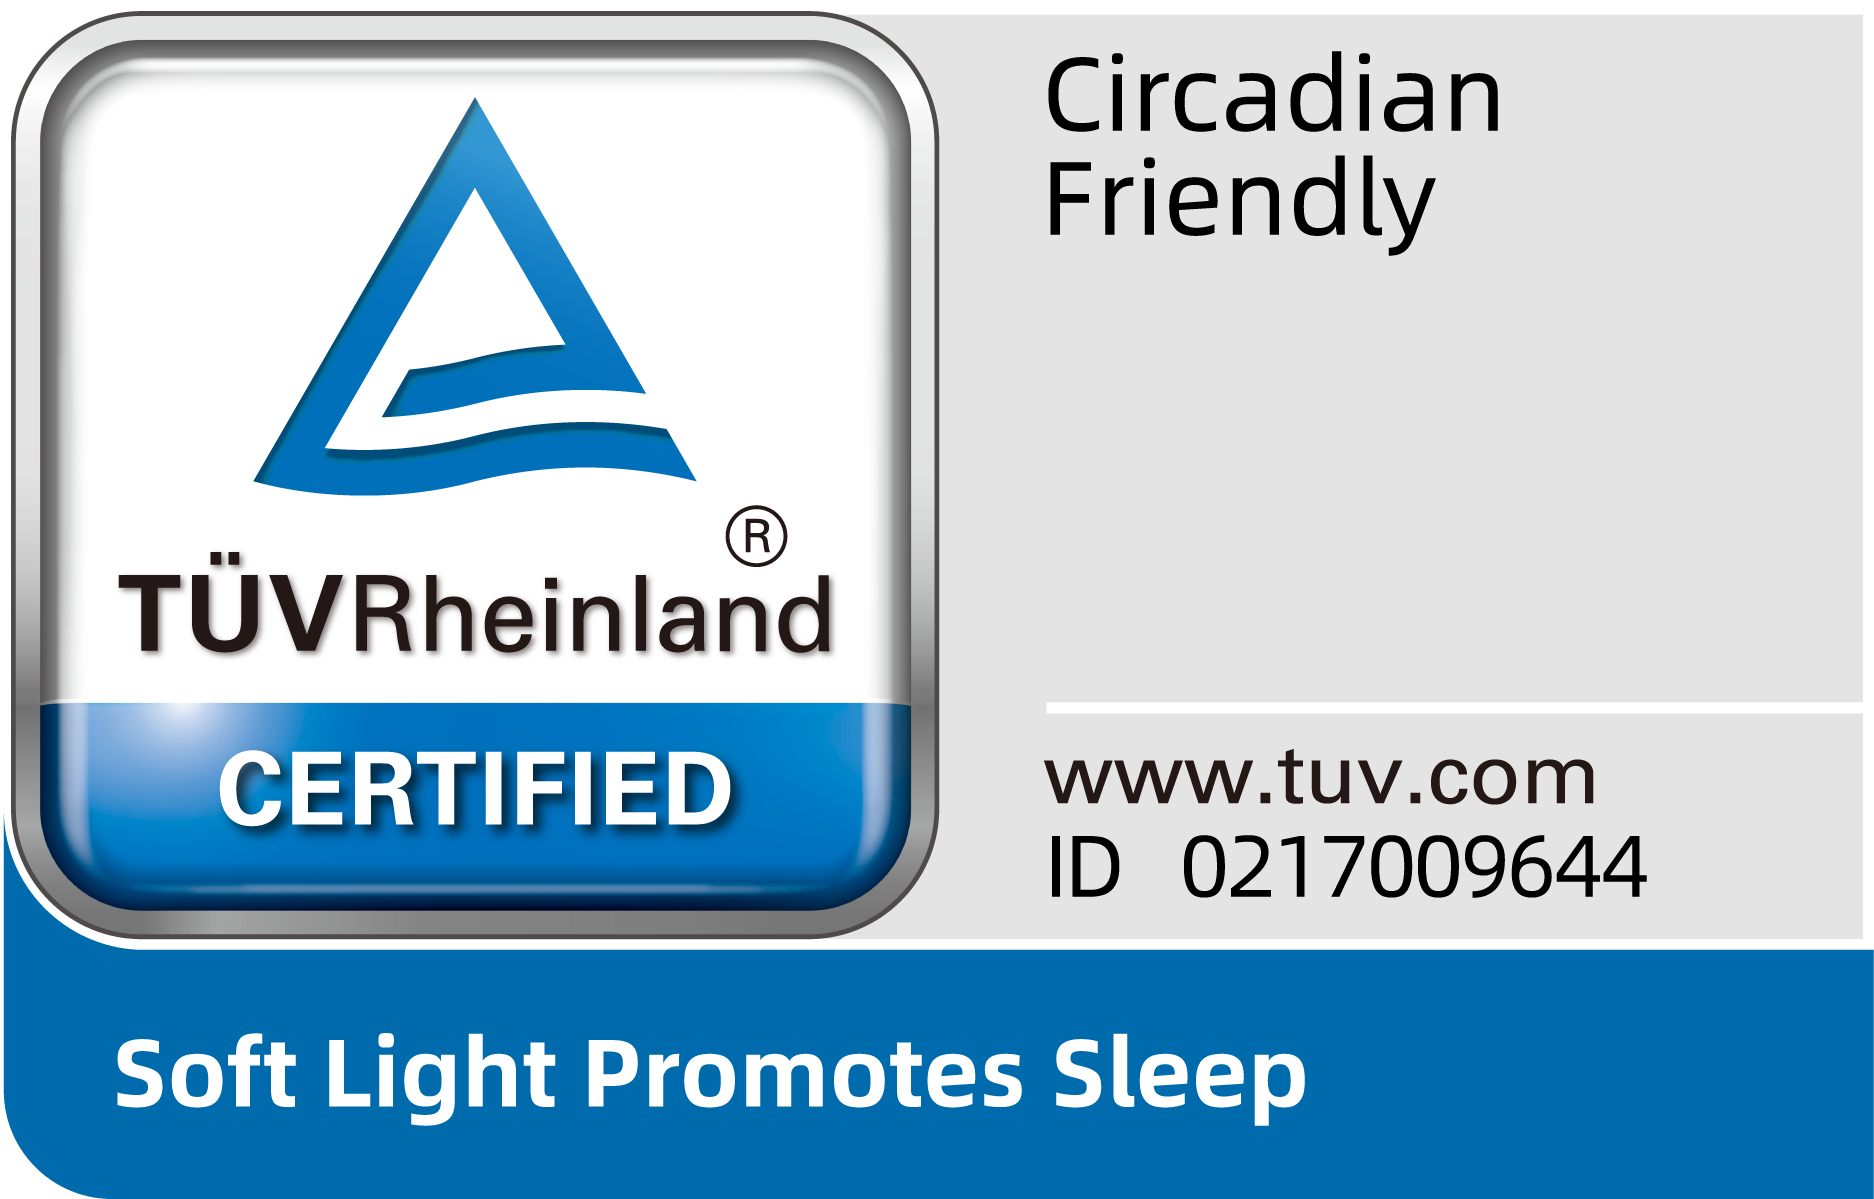 Certyfikat TÜV Rheinland Circadian Friendly. 2